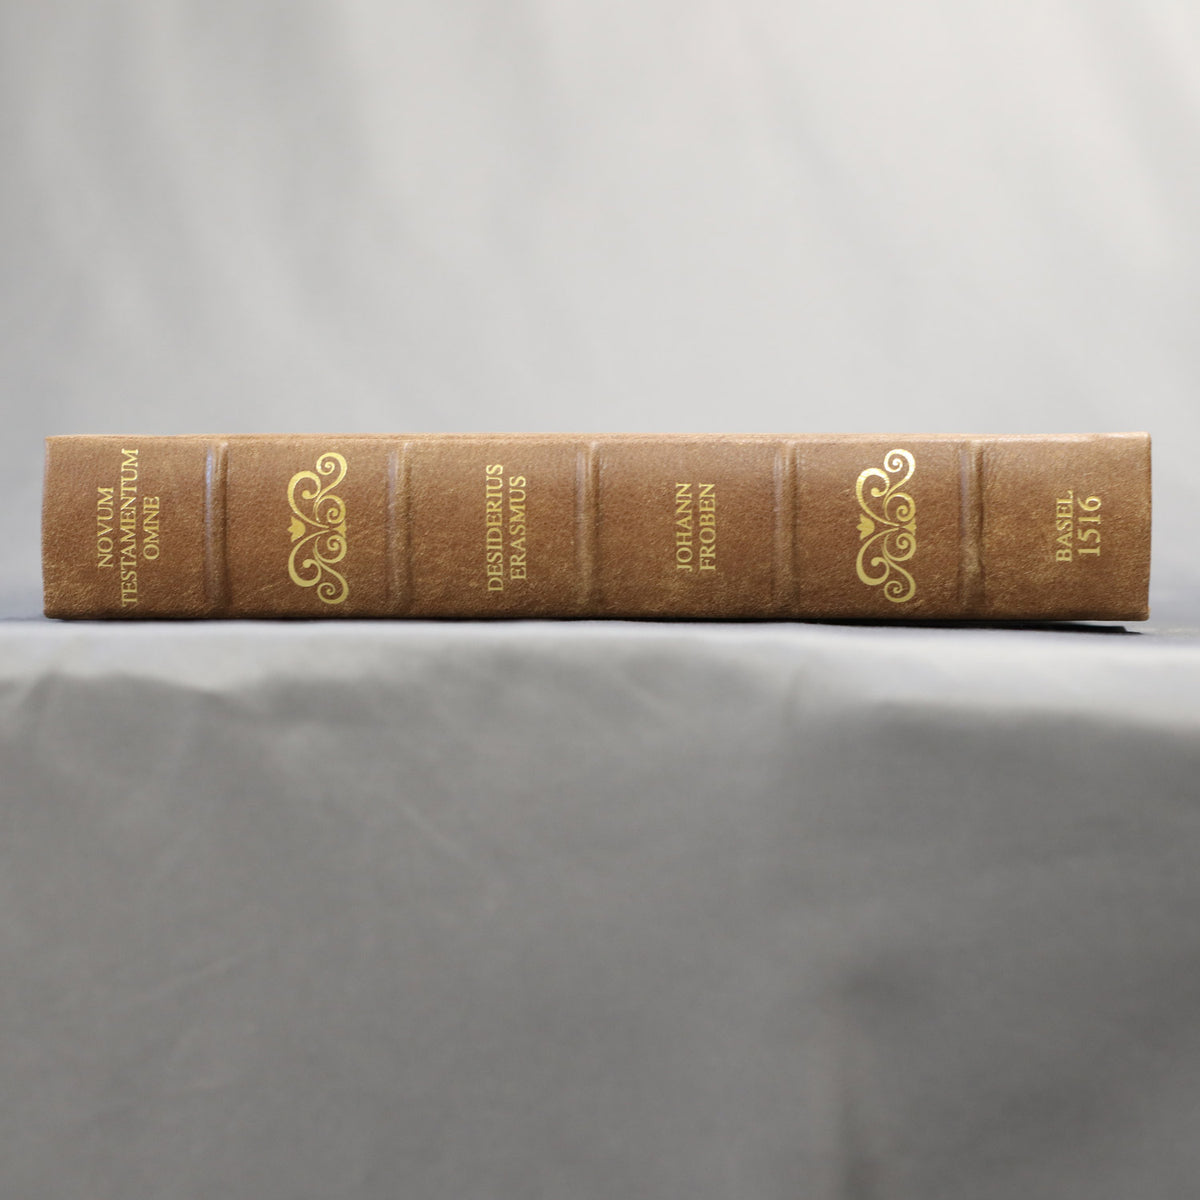 Erasmus Greek New Testament - 1516 Facsimile Carroll Stallone Rawhide Leather